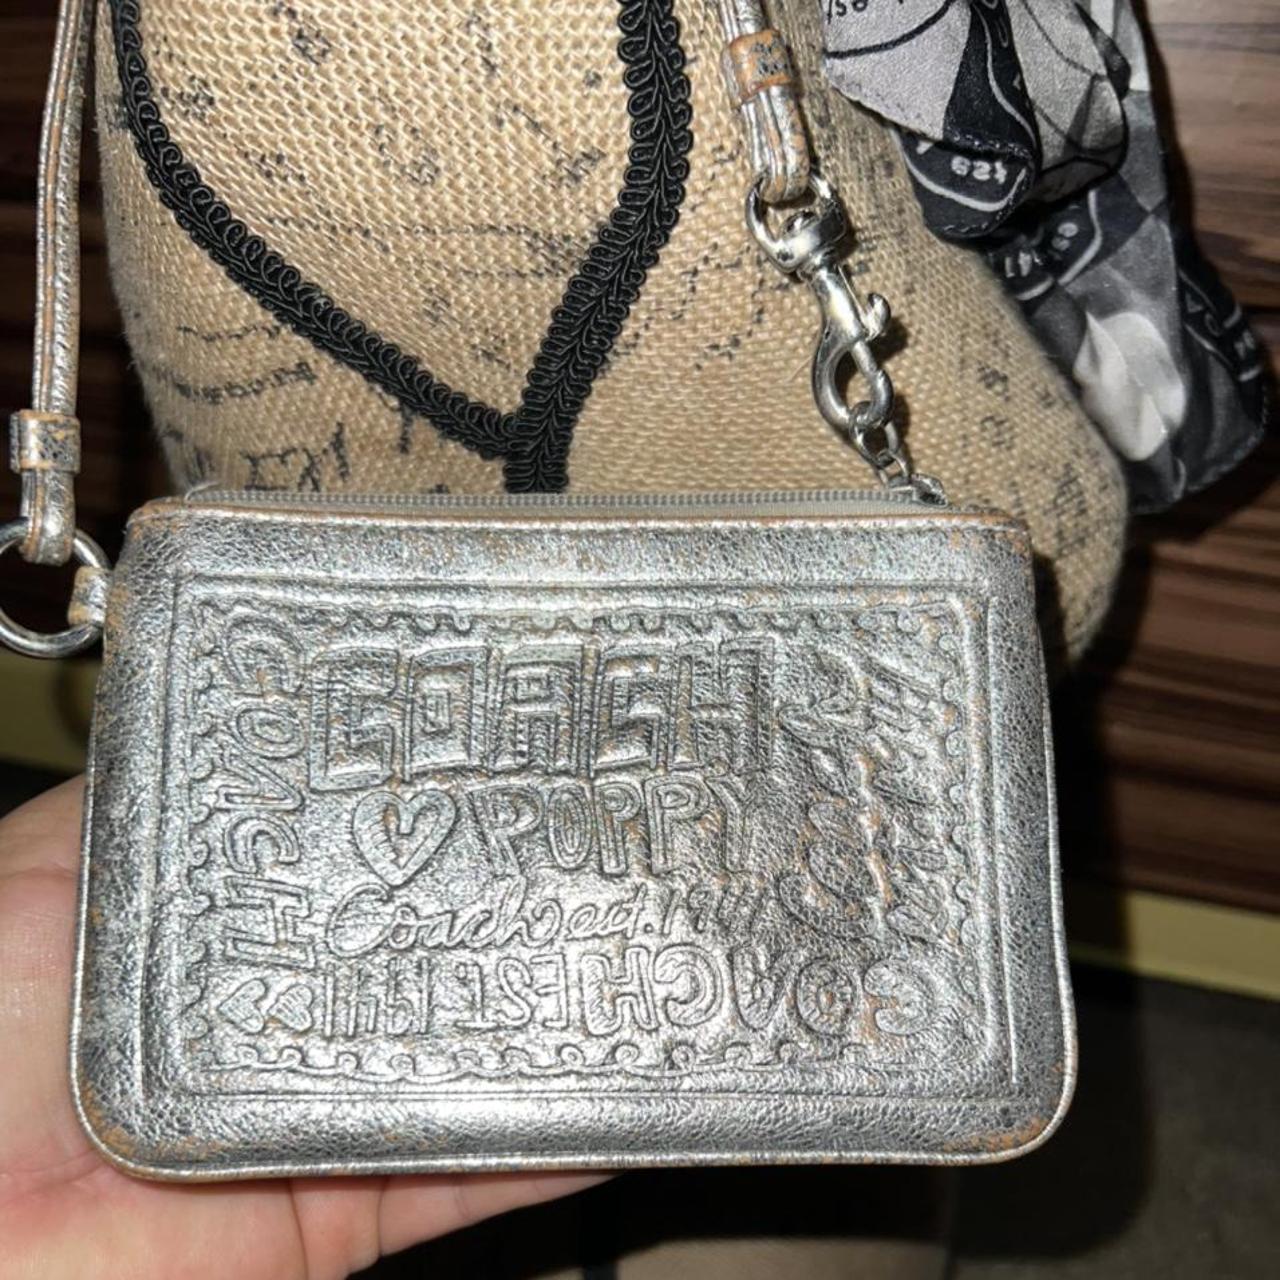 AUTHENTIC rare y2k coach poppy crossbody purse  - Depop